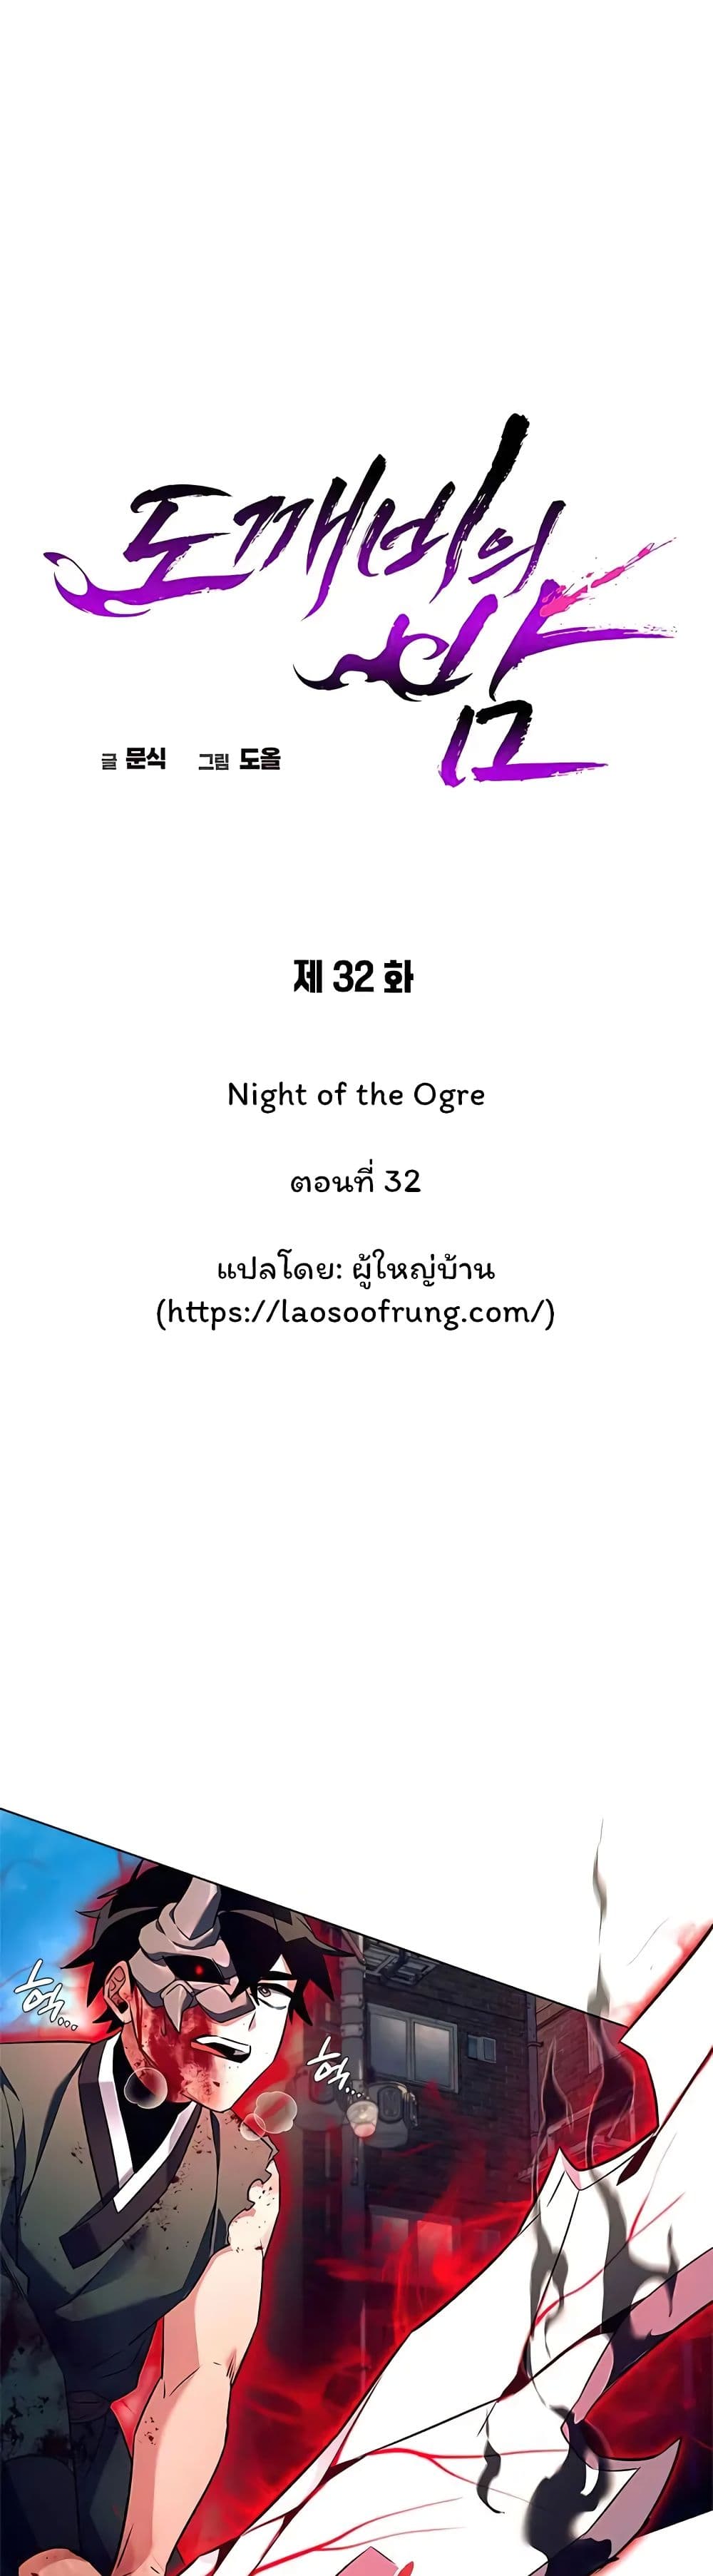 Night of the Ogre 32-32